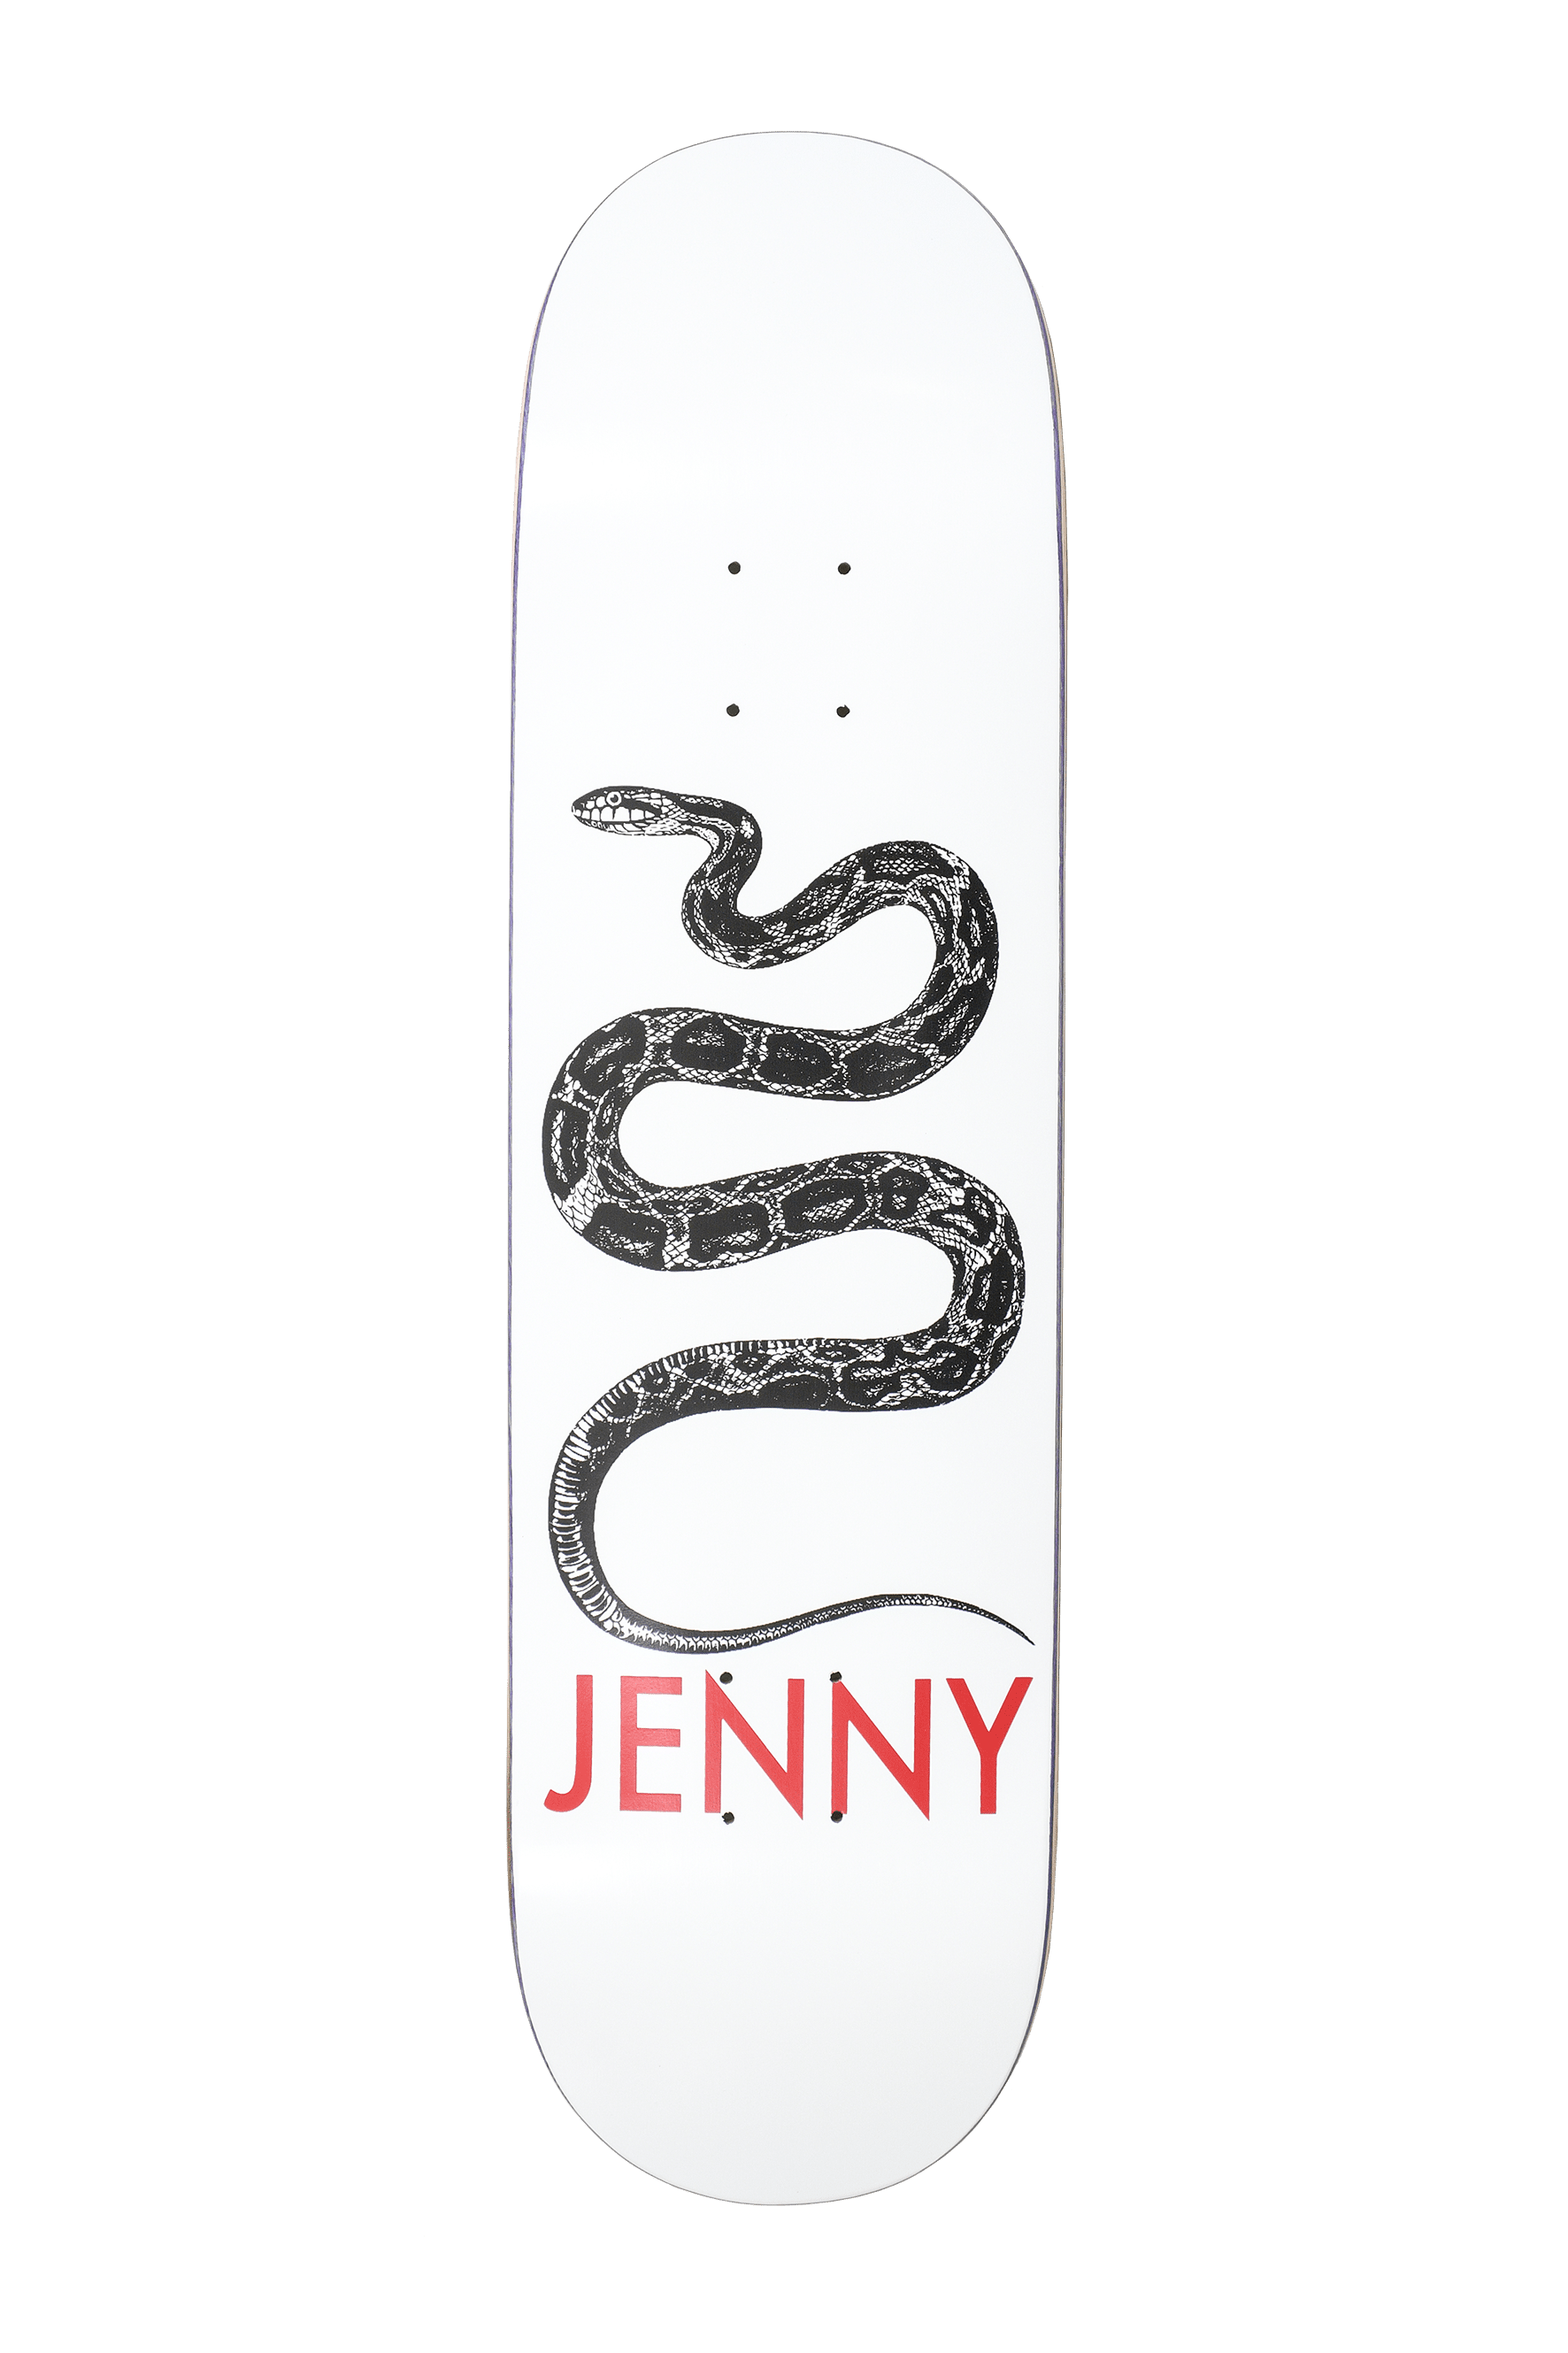 JENNY White Snek 8.1 Skateboard Deck Skateboard Decks Jenny 